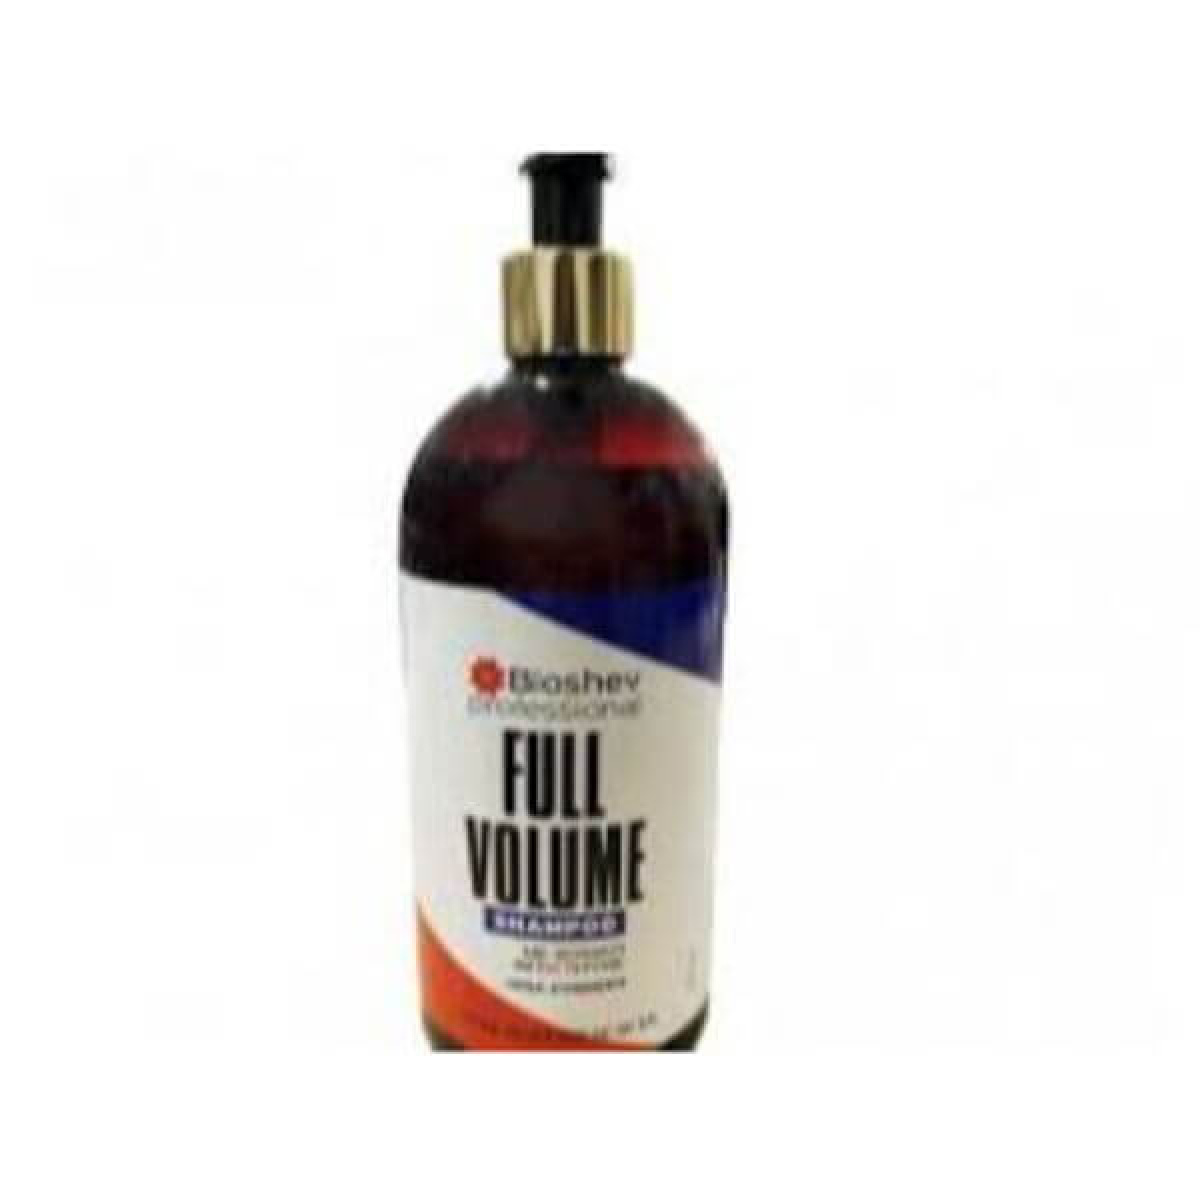 bioshev-full-volume-shampoo-500ml